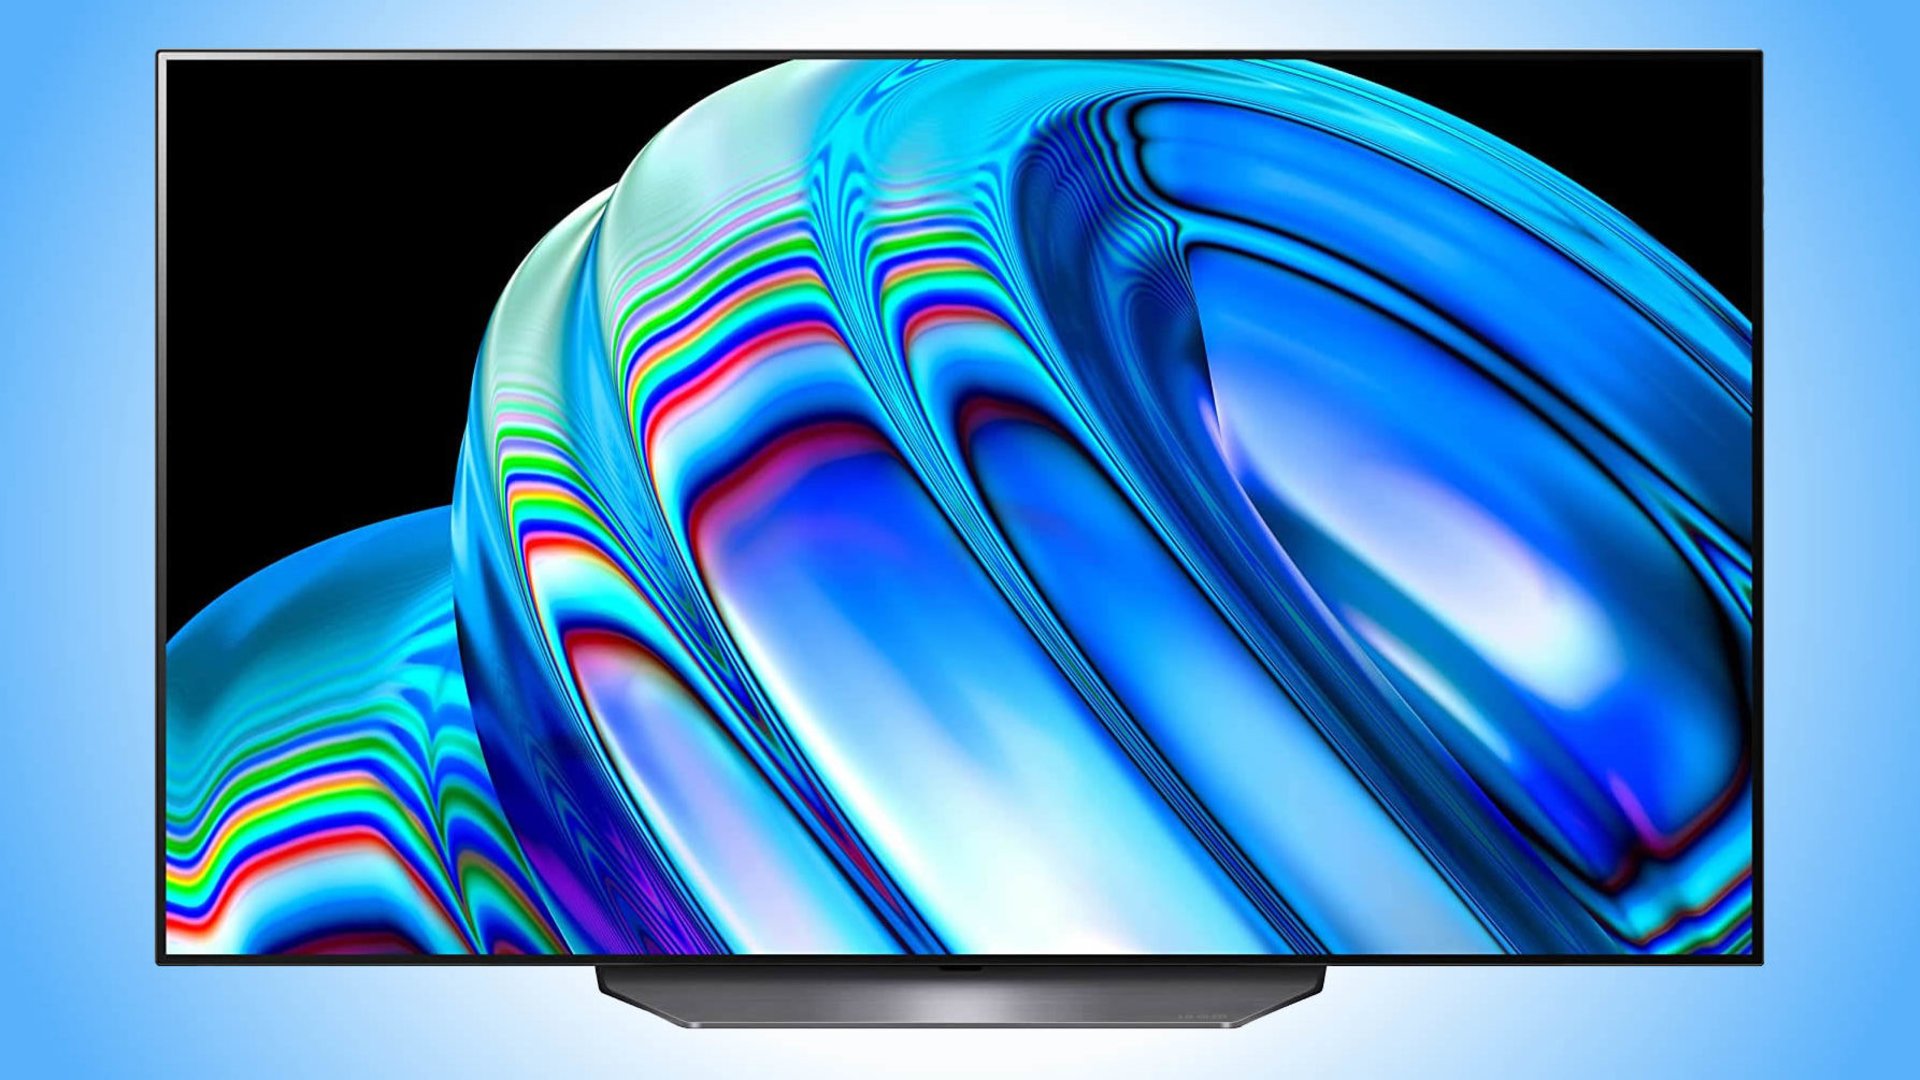 #Amazon verkauft LG-OLED-TV mit 55 Zoll zum Sparpreis